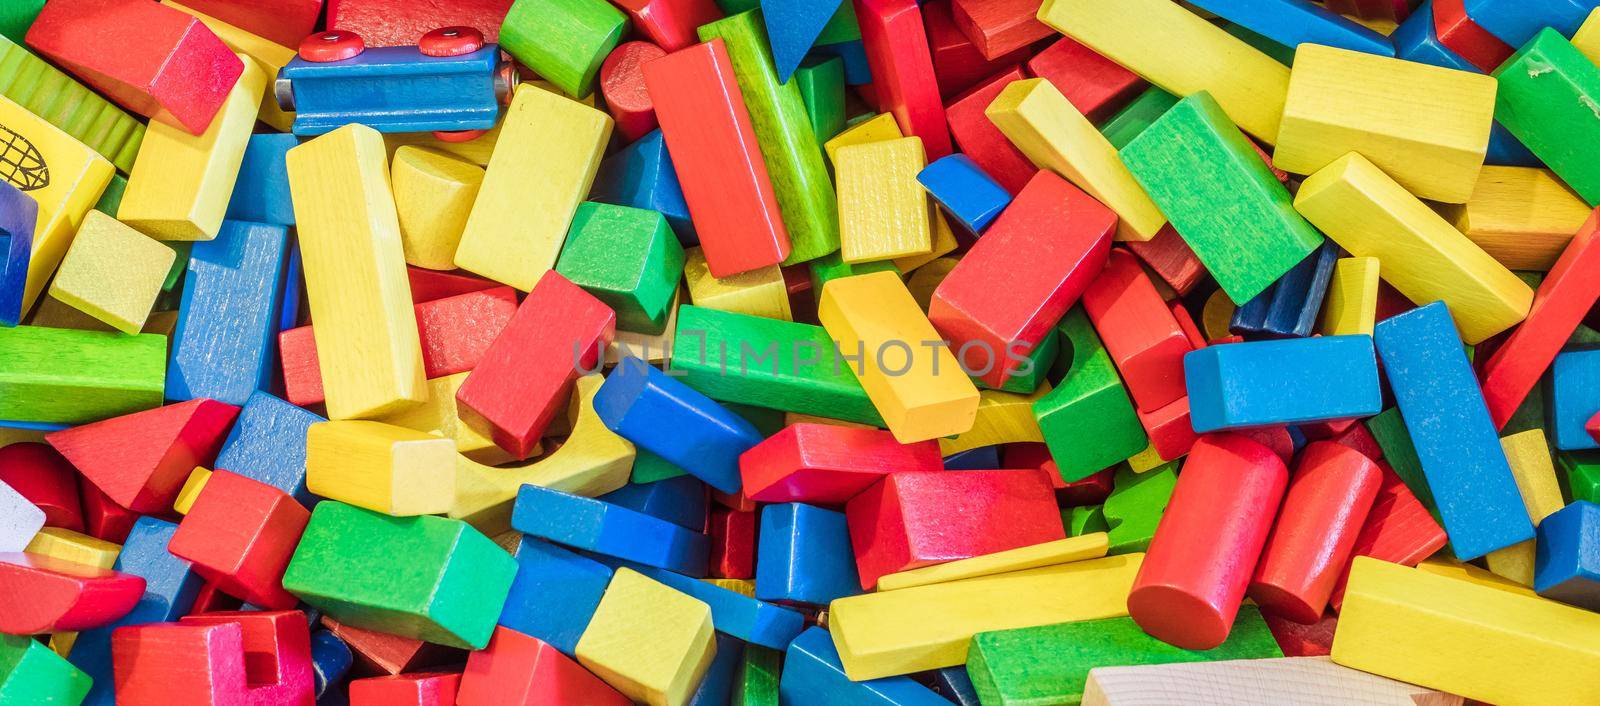 Playing with wooden toy blocks in kindergarten or preschool by Daxenbichler